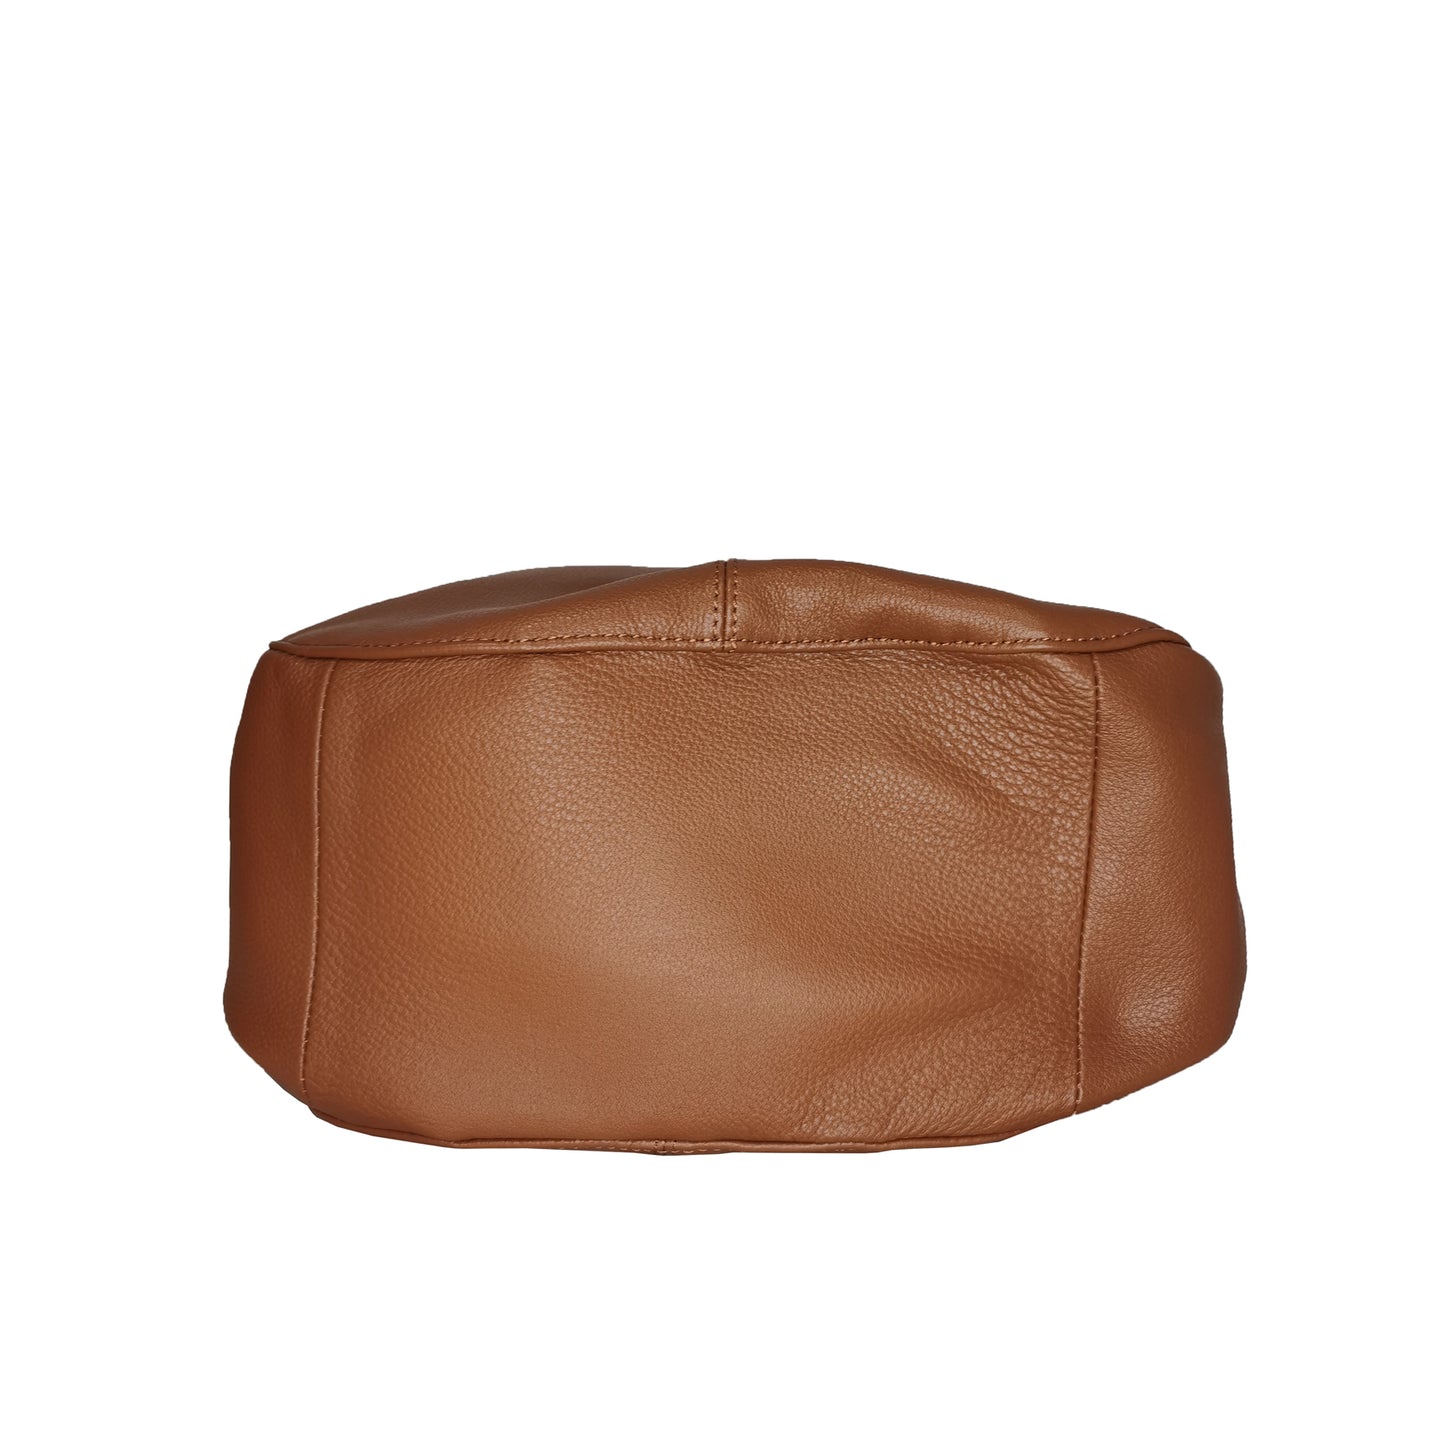 Unisex Men's and Women's genuine cowhide leather handbag Cara V2 design